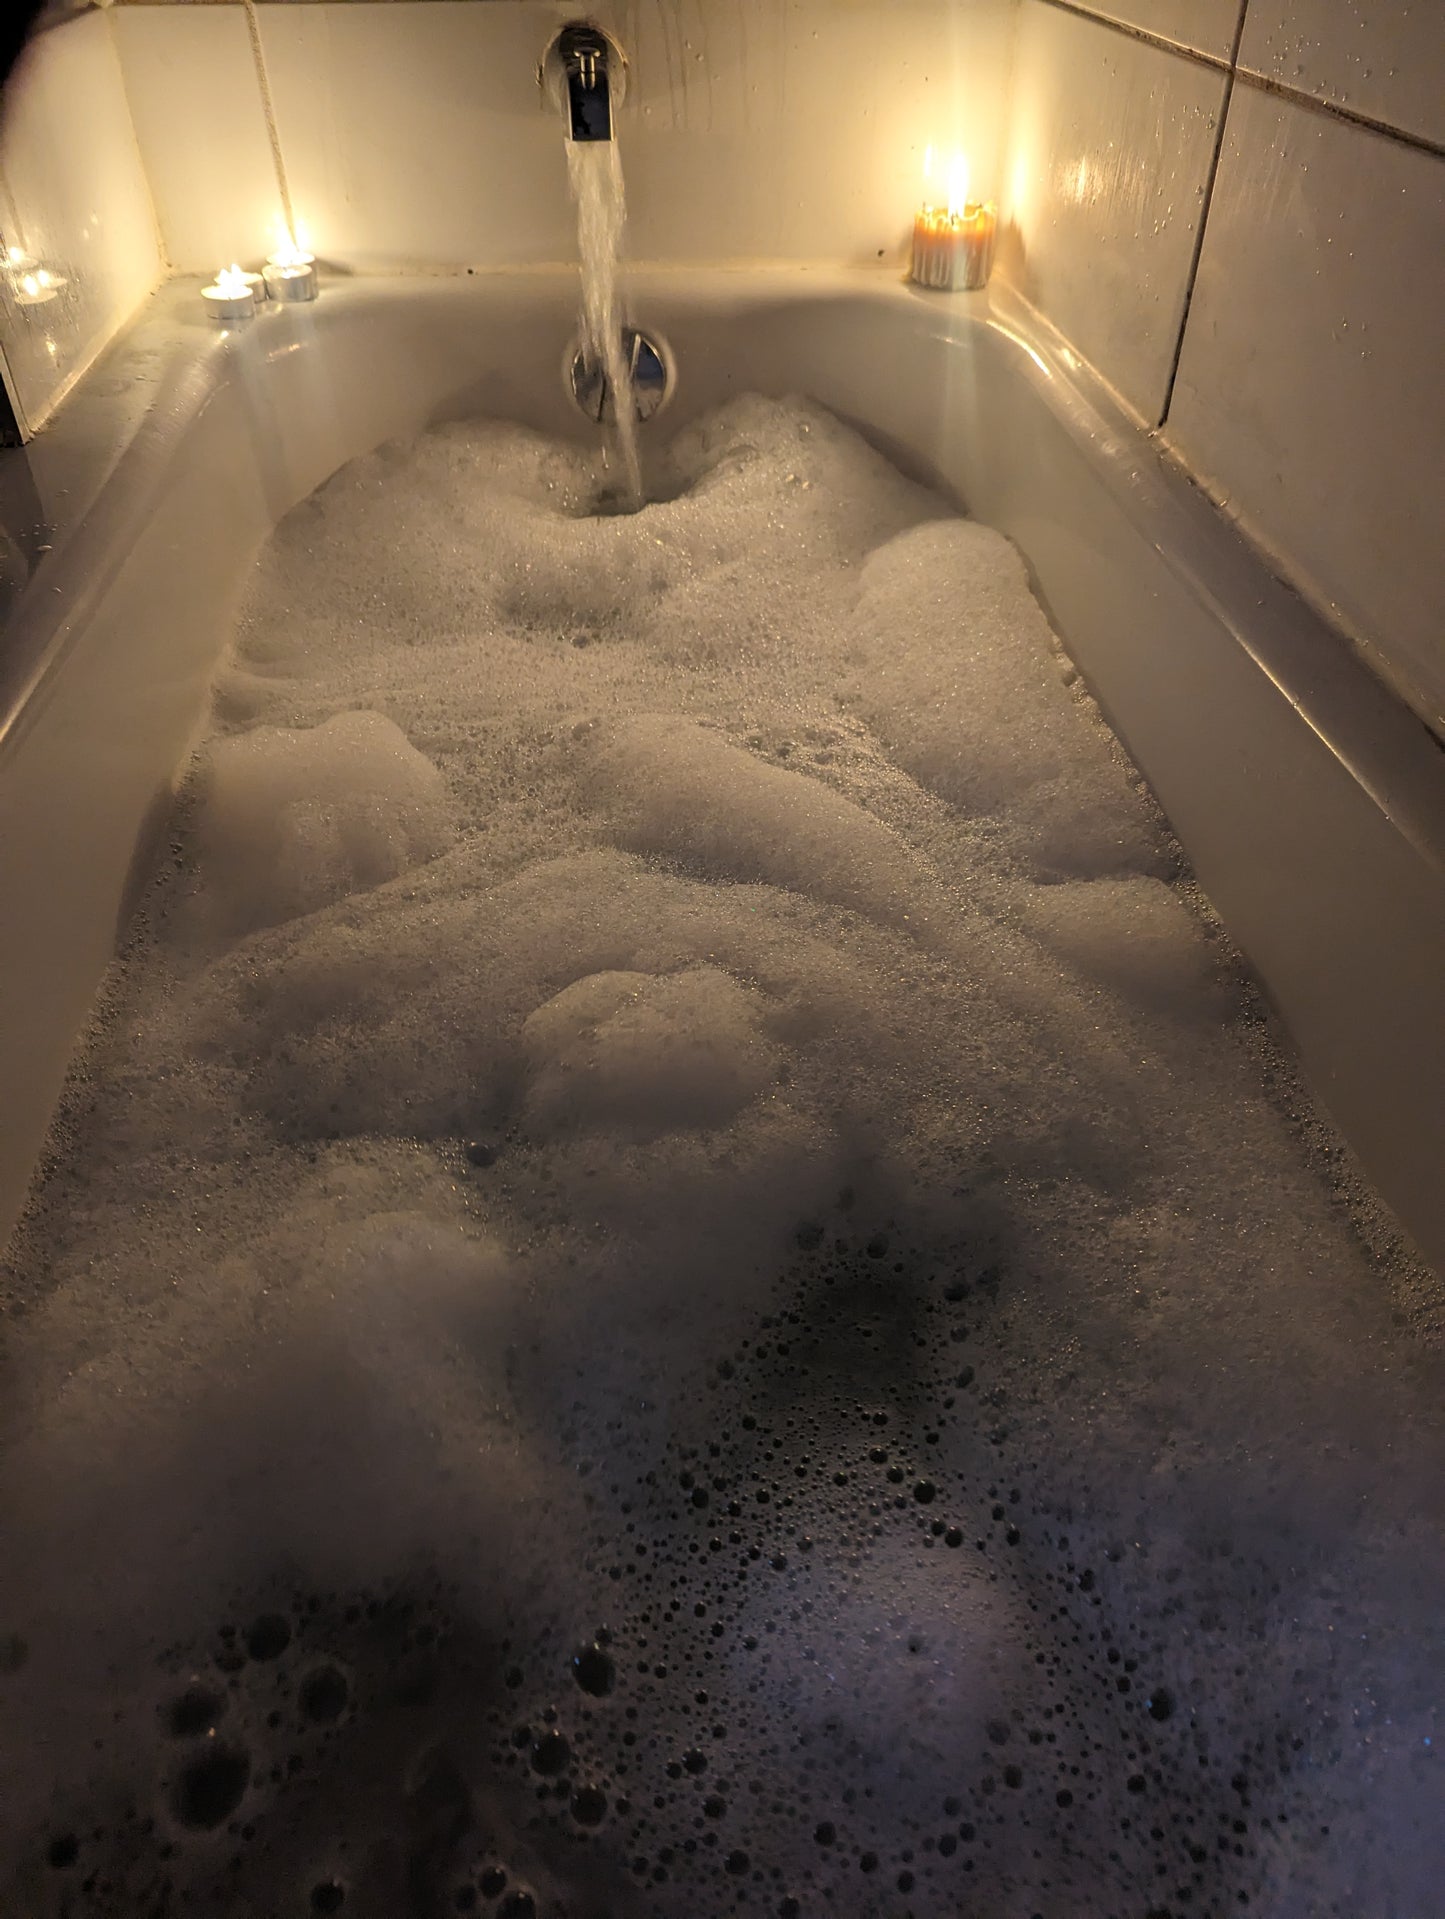 Solid bubble bath: La Rêveuse